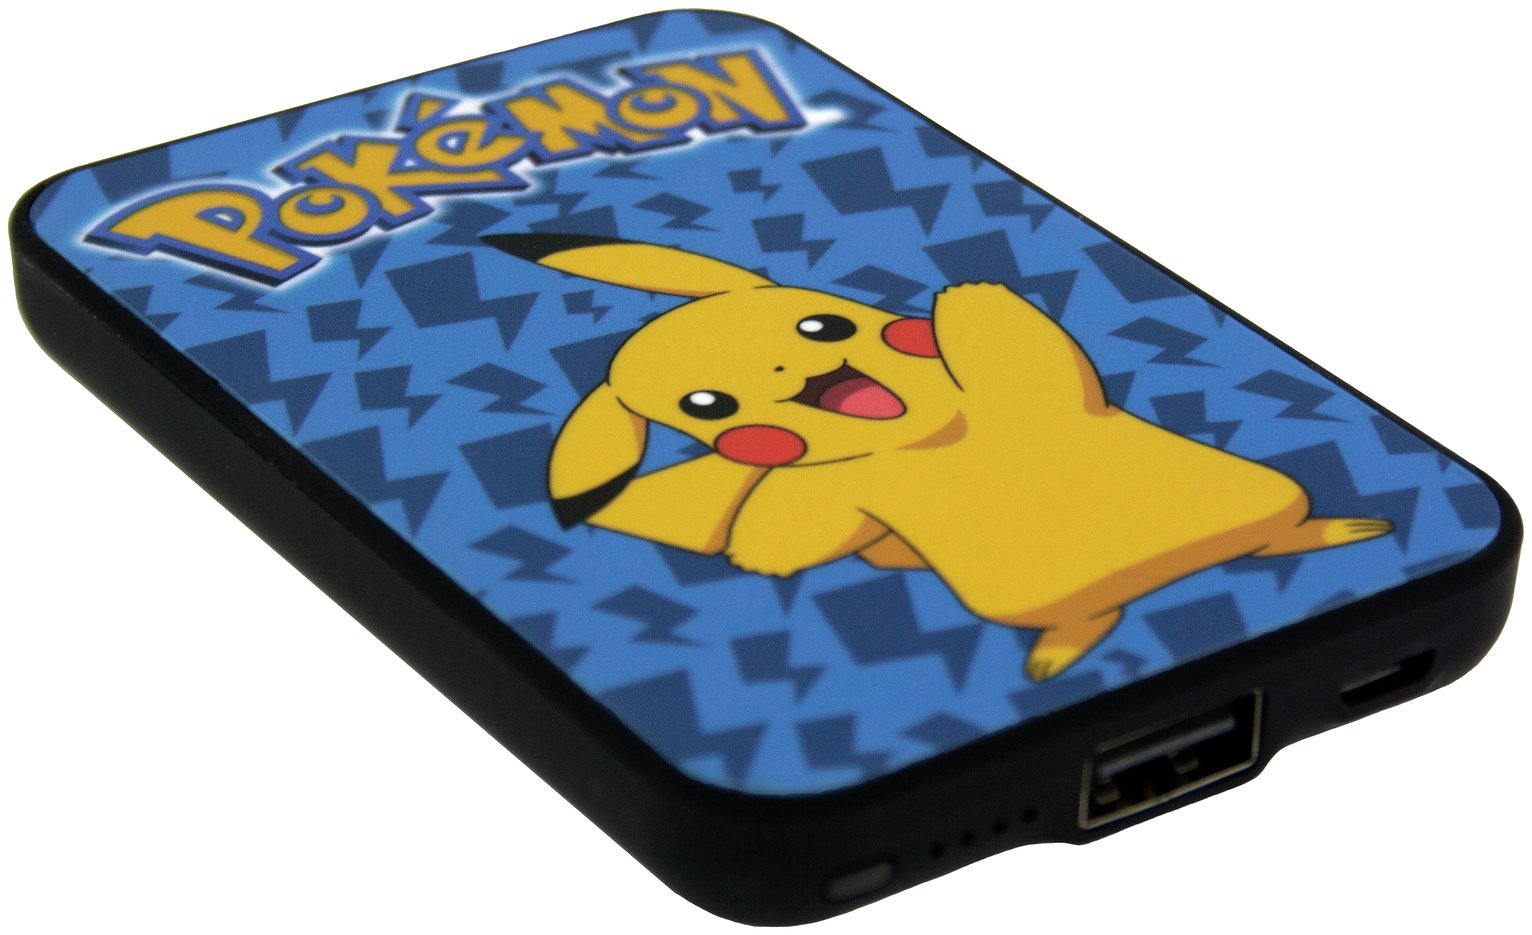 Pikachu Portable Power Bank 5000mAh review